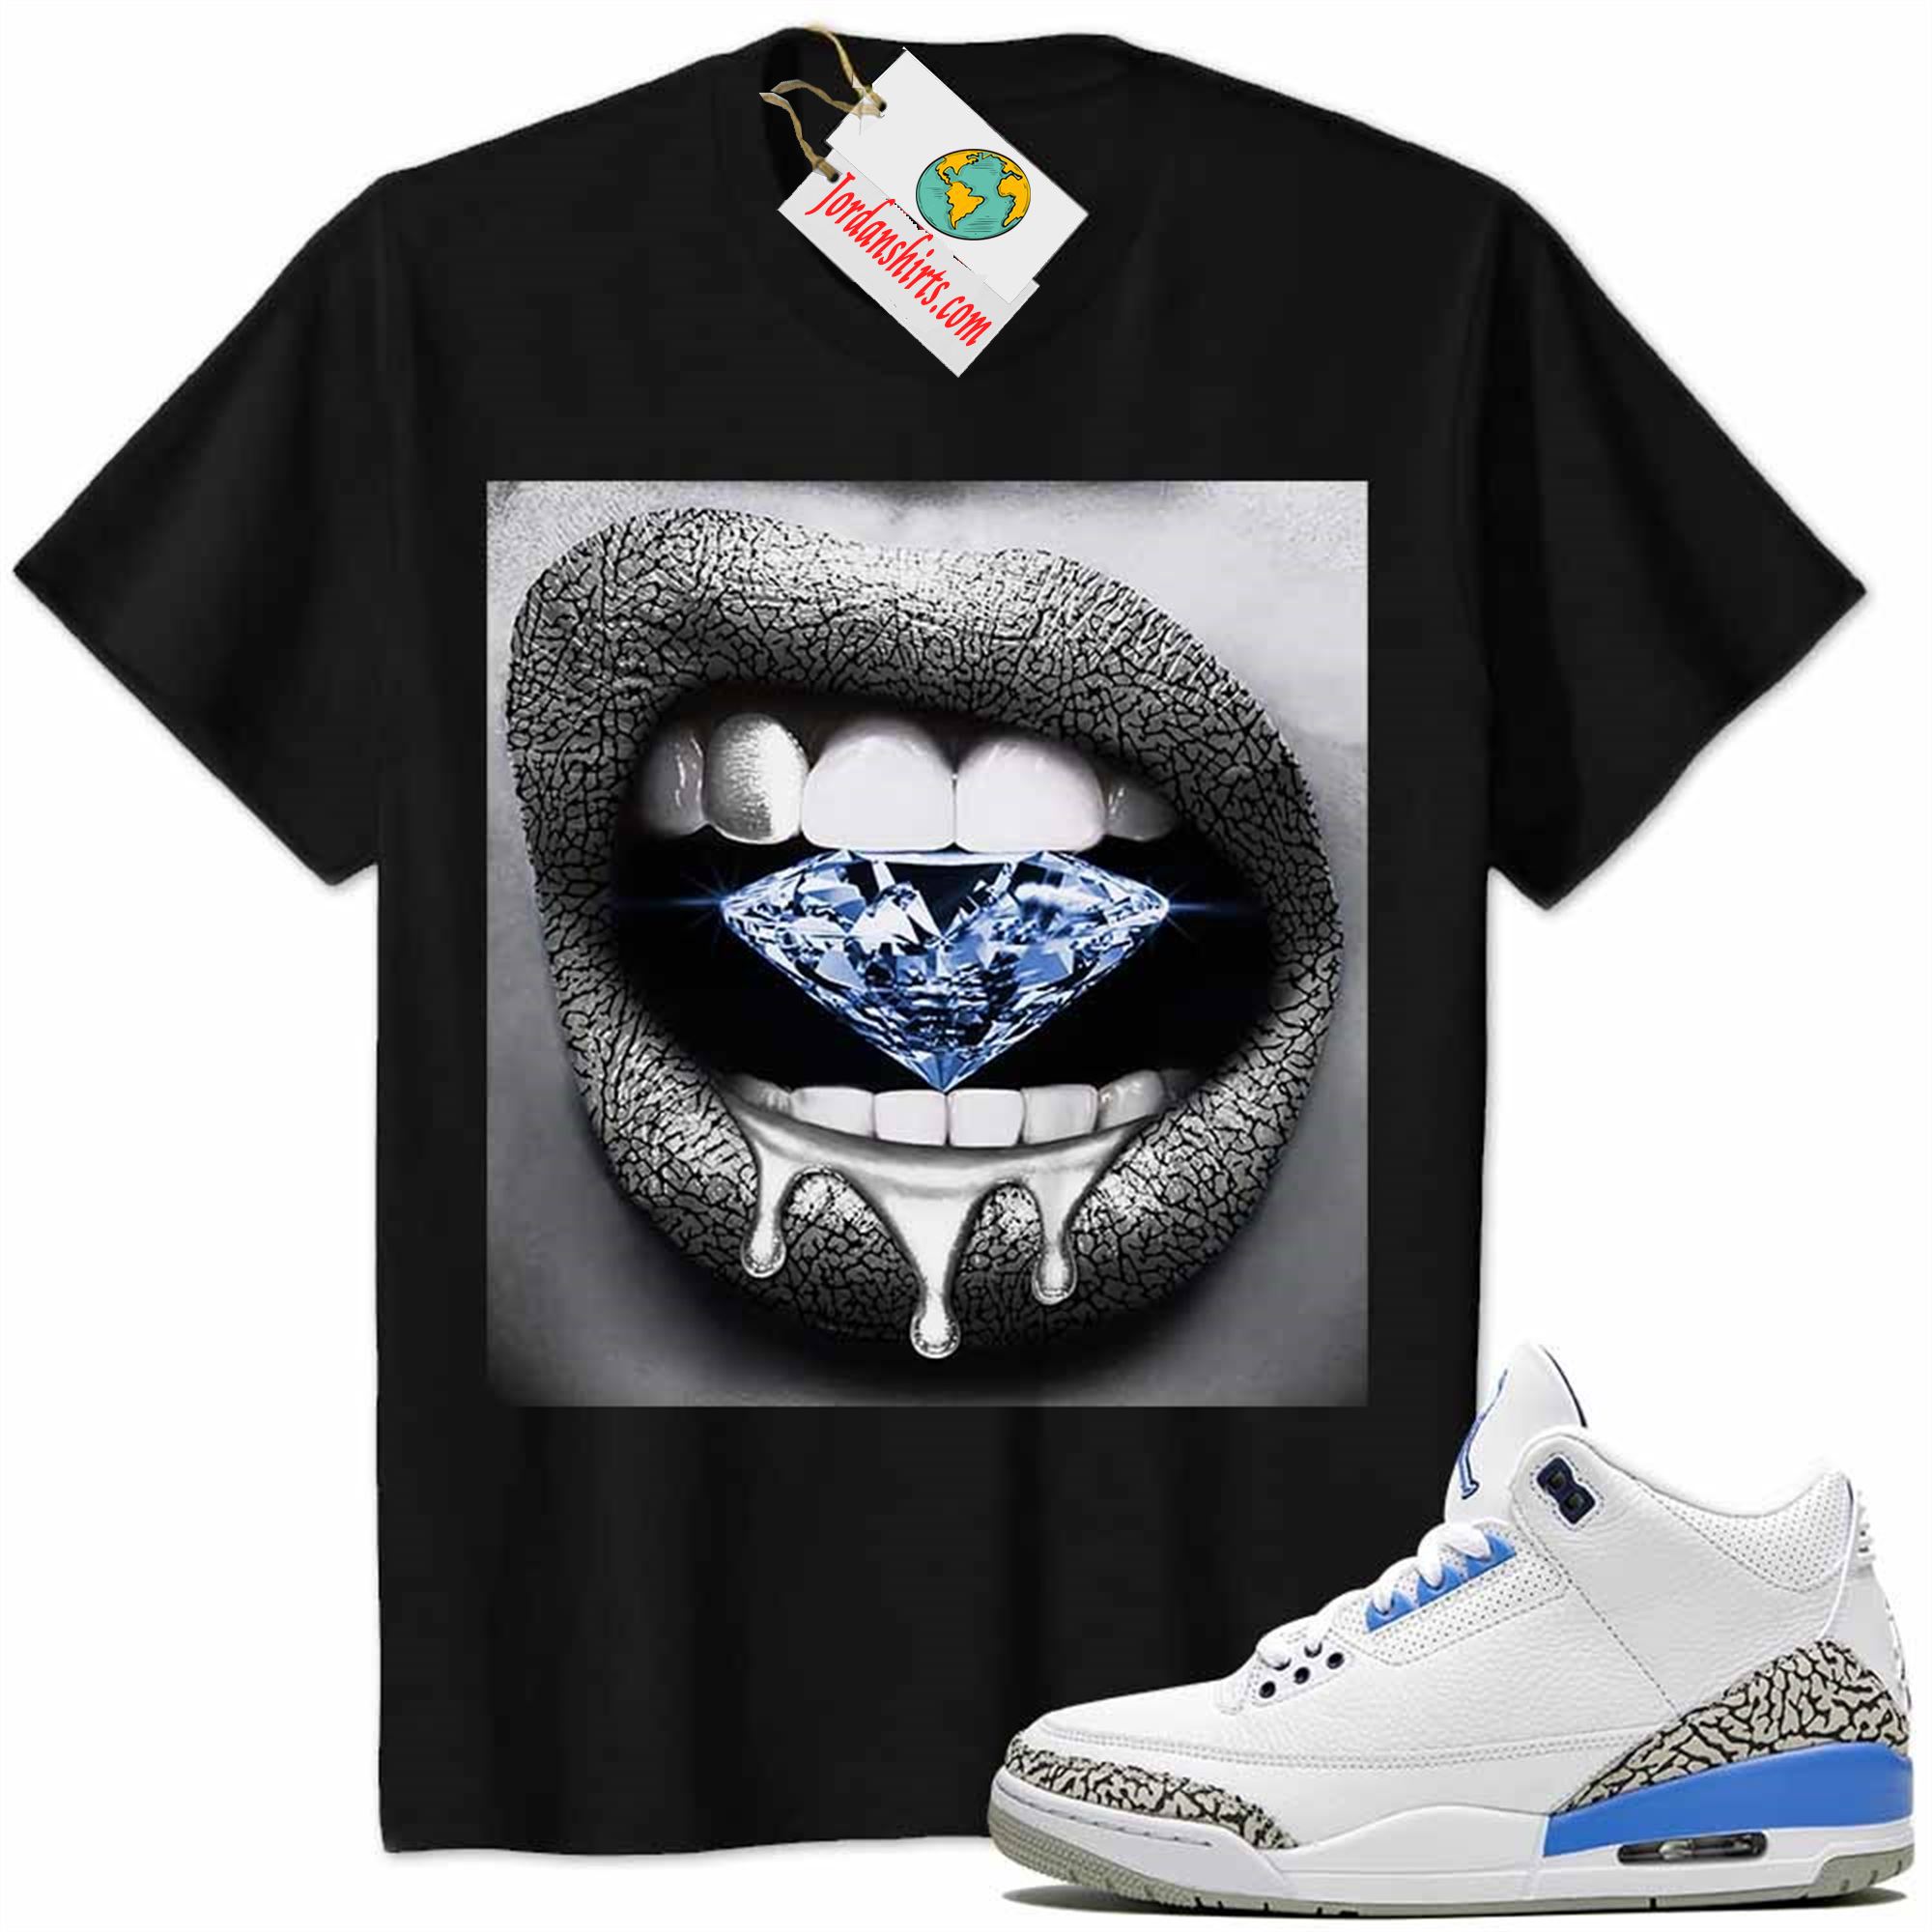 Jordan 3 Shirt, Jordan 3 Unc Shirt Sexy Lip Bite Diamond Dripping Black Full Size Up To 5xl